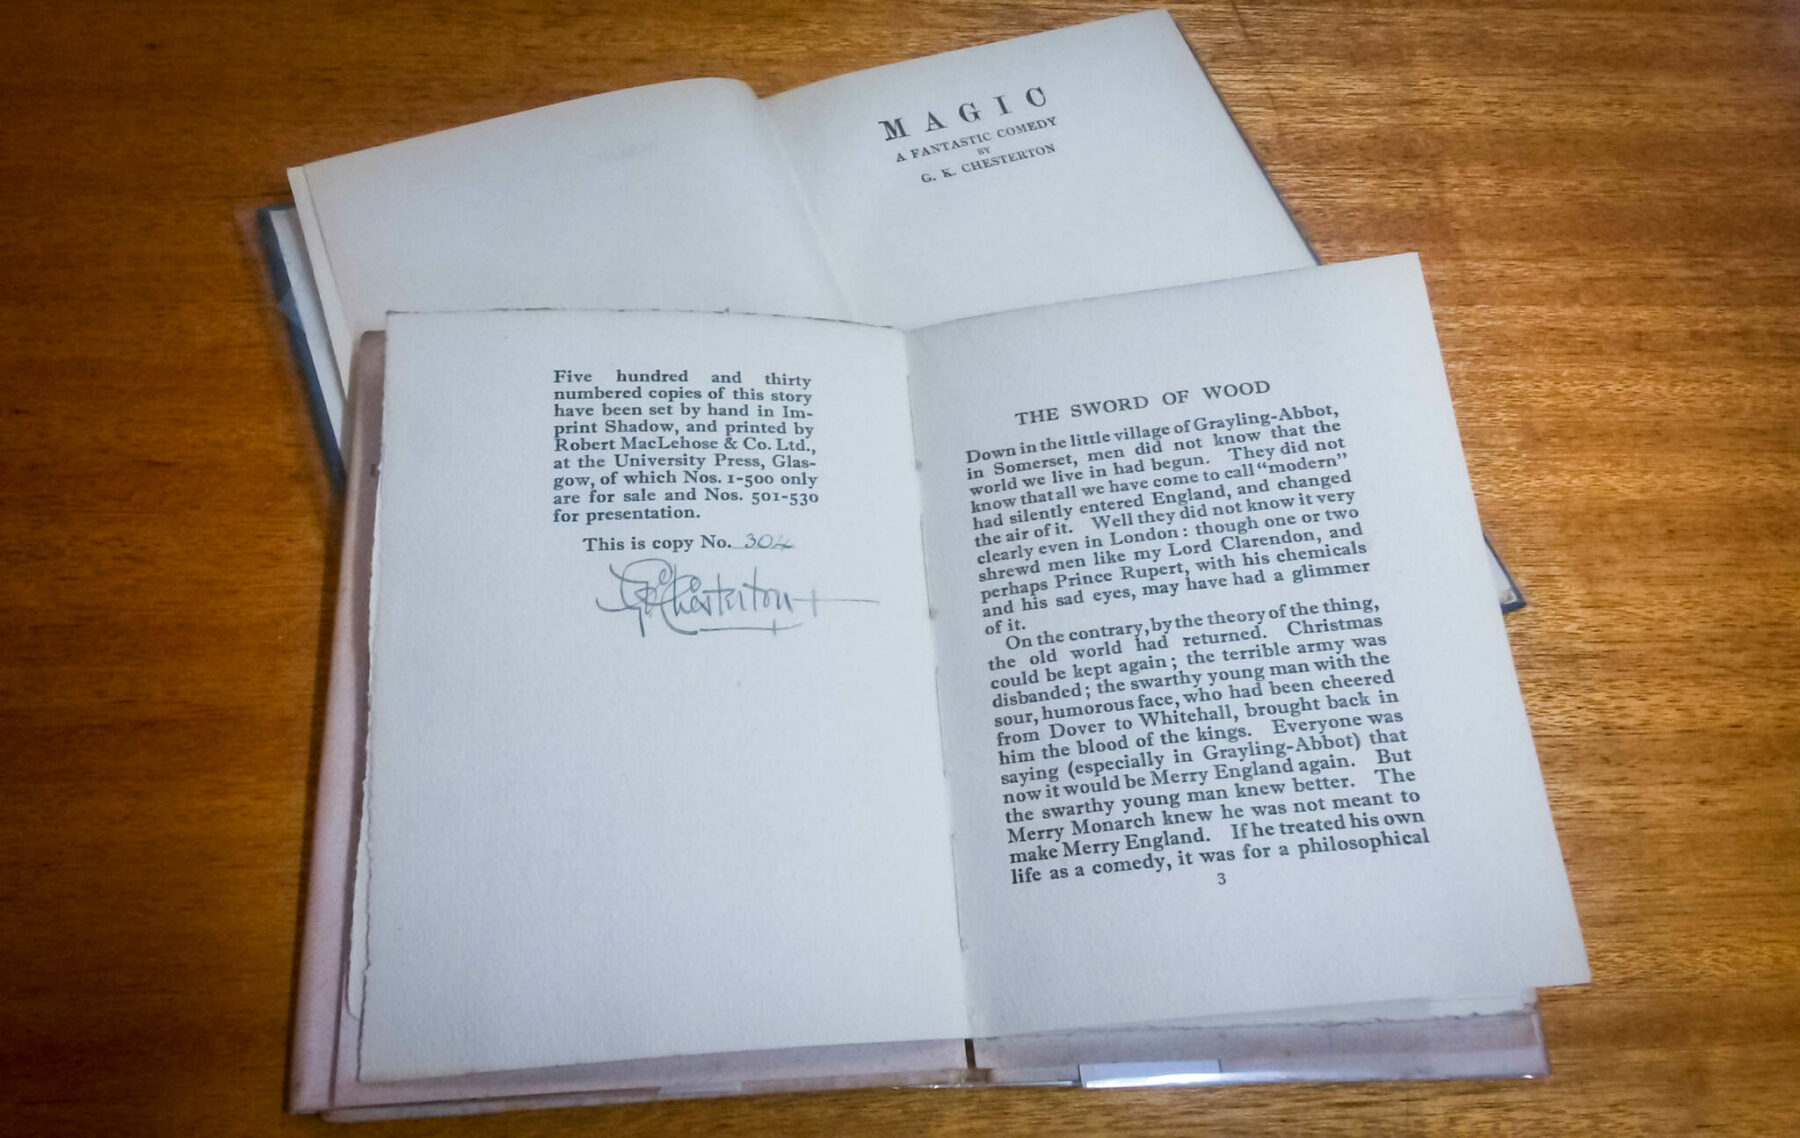 Campion obtains GK Chesterton original signed books